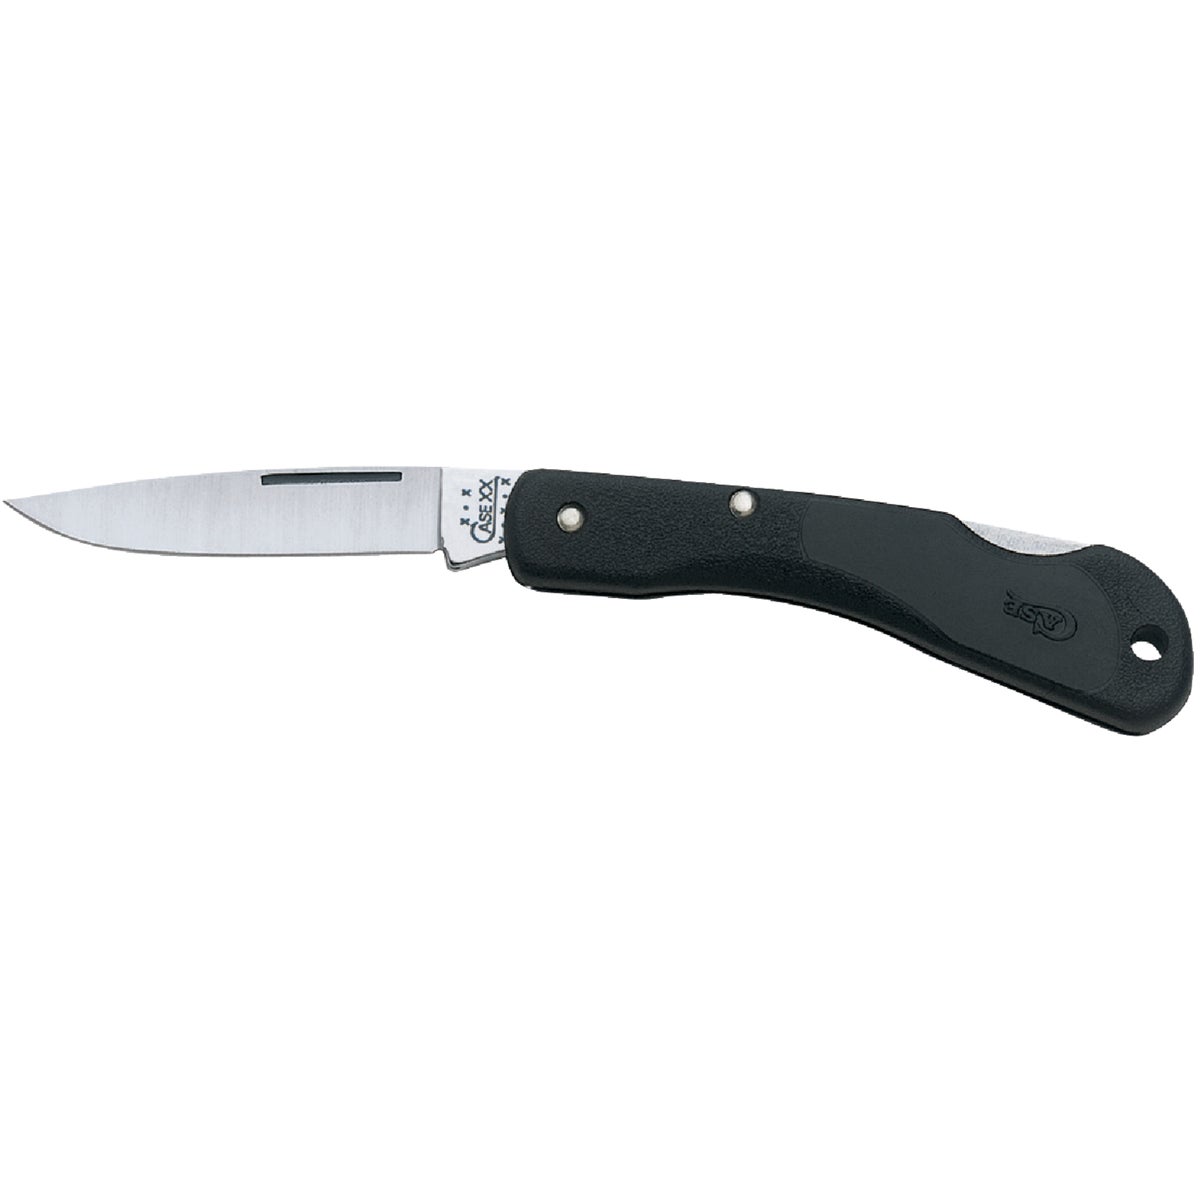 Item 803499, Mini Blackhorn folding knife featuring a lightweight Zytel handle.